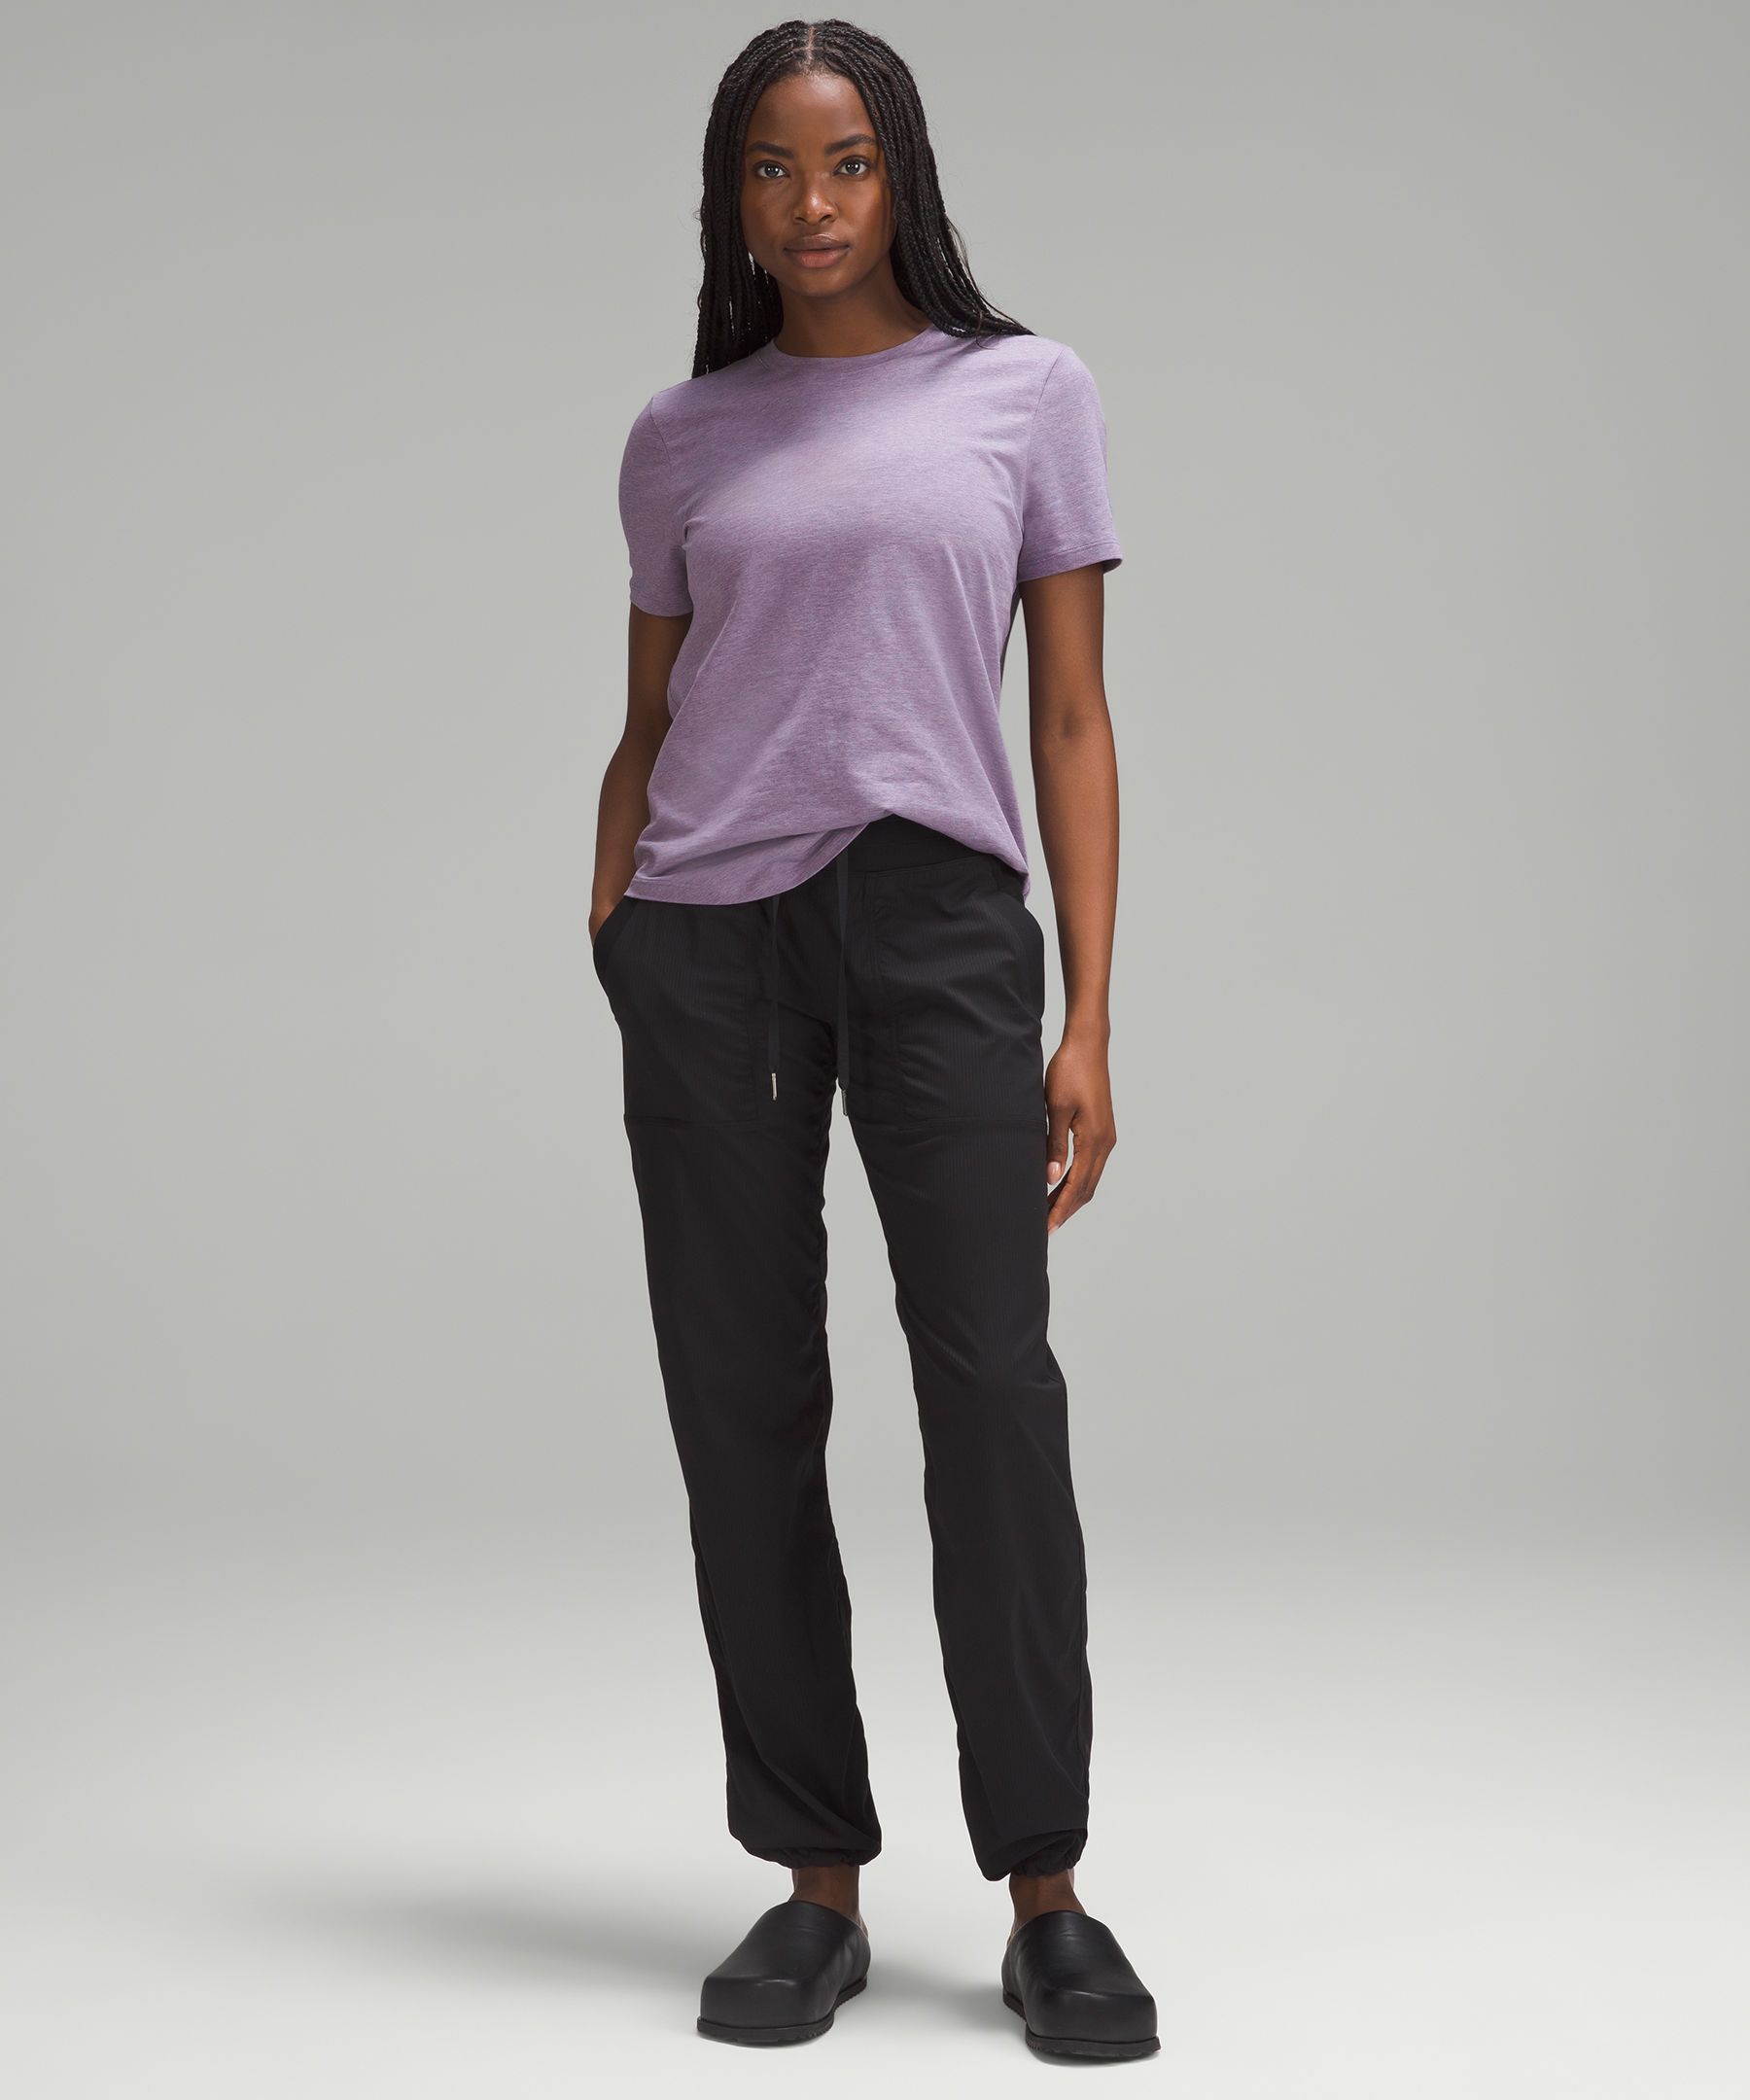 Lululemon Love Crewneck T-Shirt Sweatshirt - Purple Pima Cotton Fabric